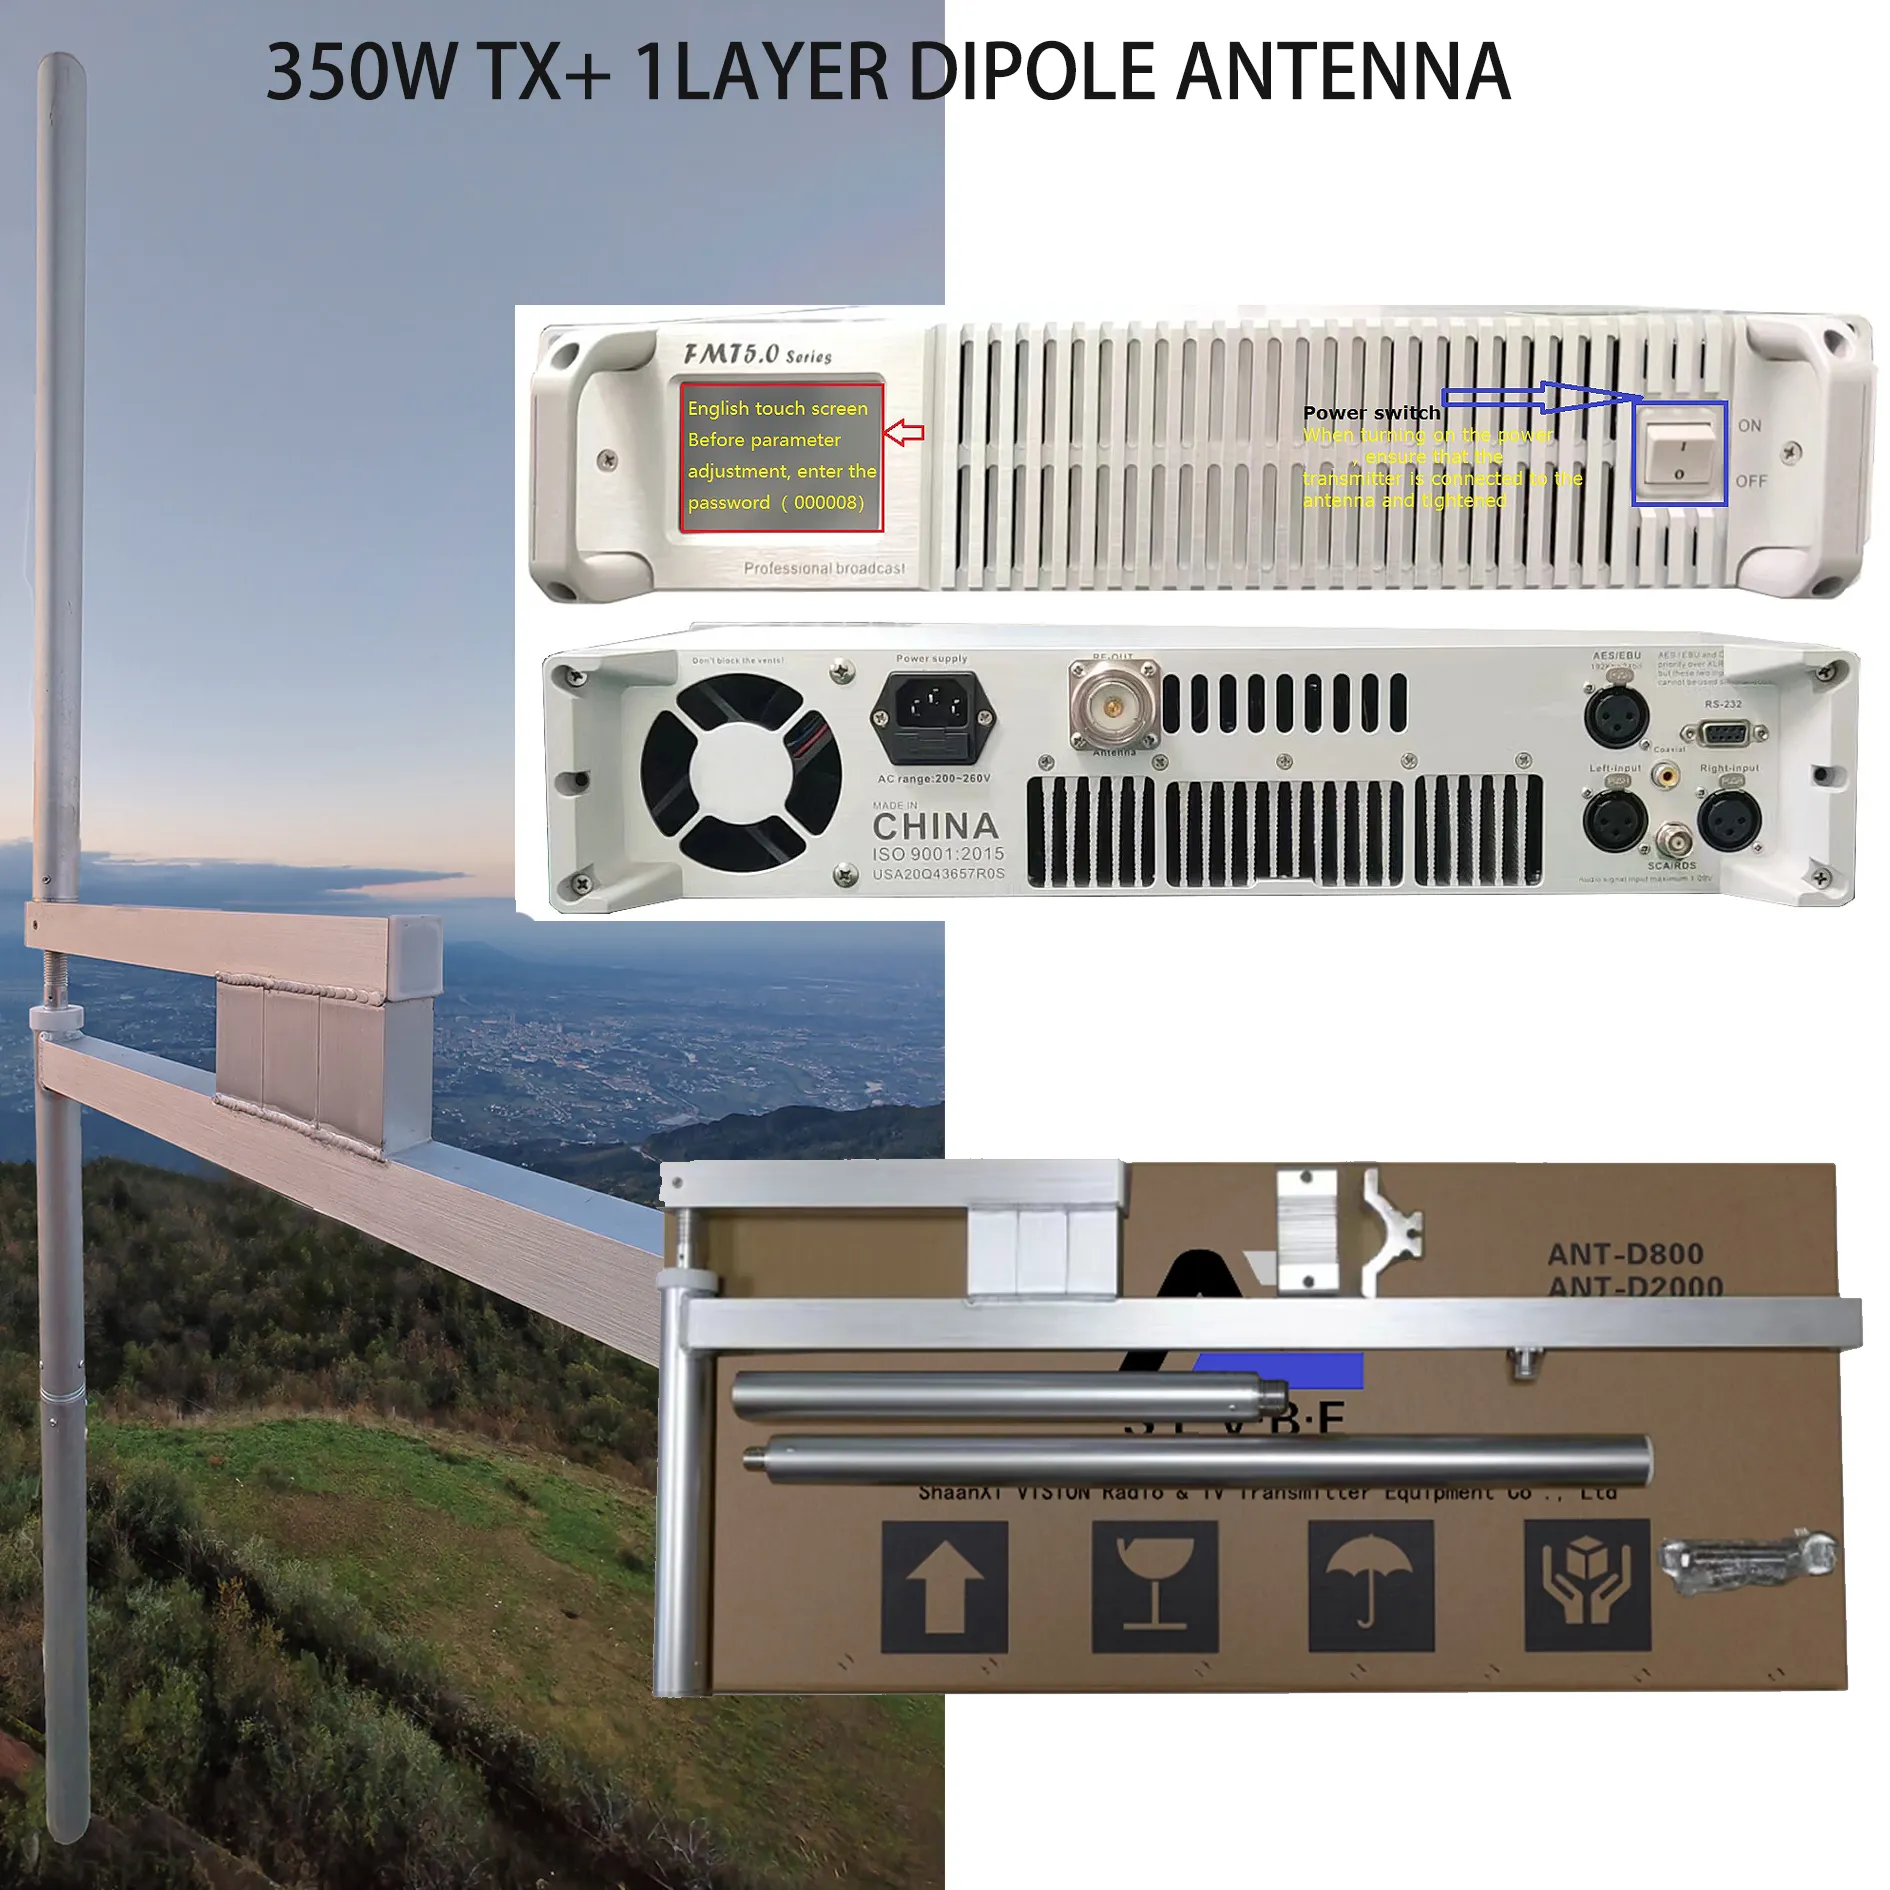 FMT5.0-350Hプロフェッショナルラジオ放送デジタル送信機放送信号カバー基地局信号カバレッジ範囲10-30km